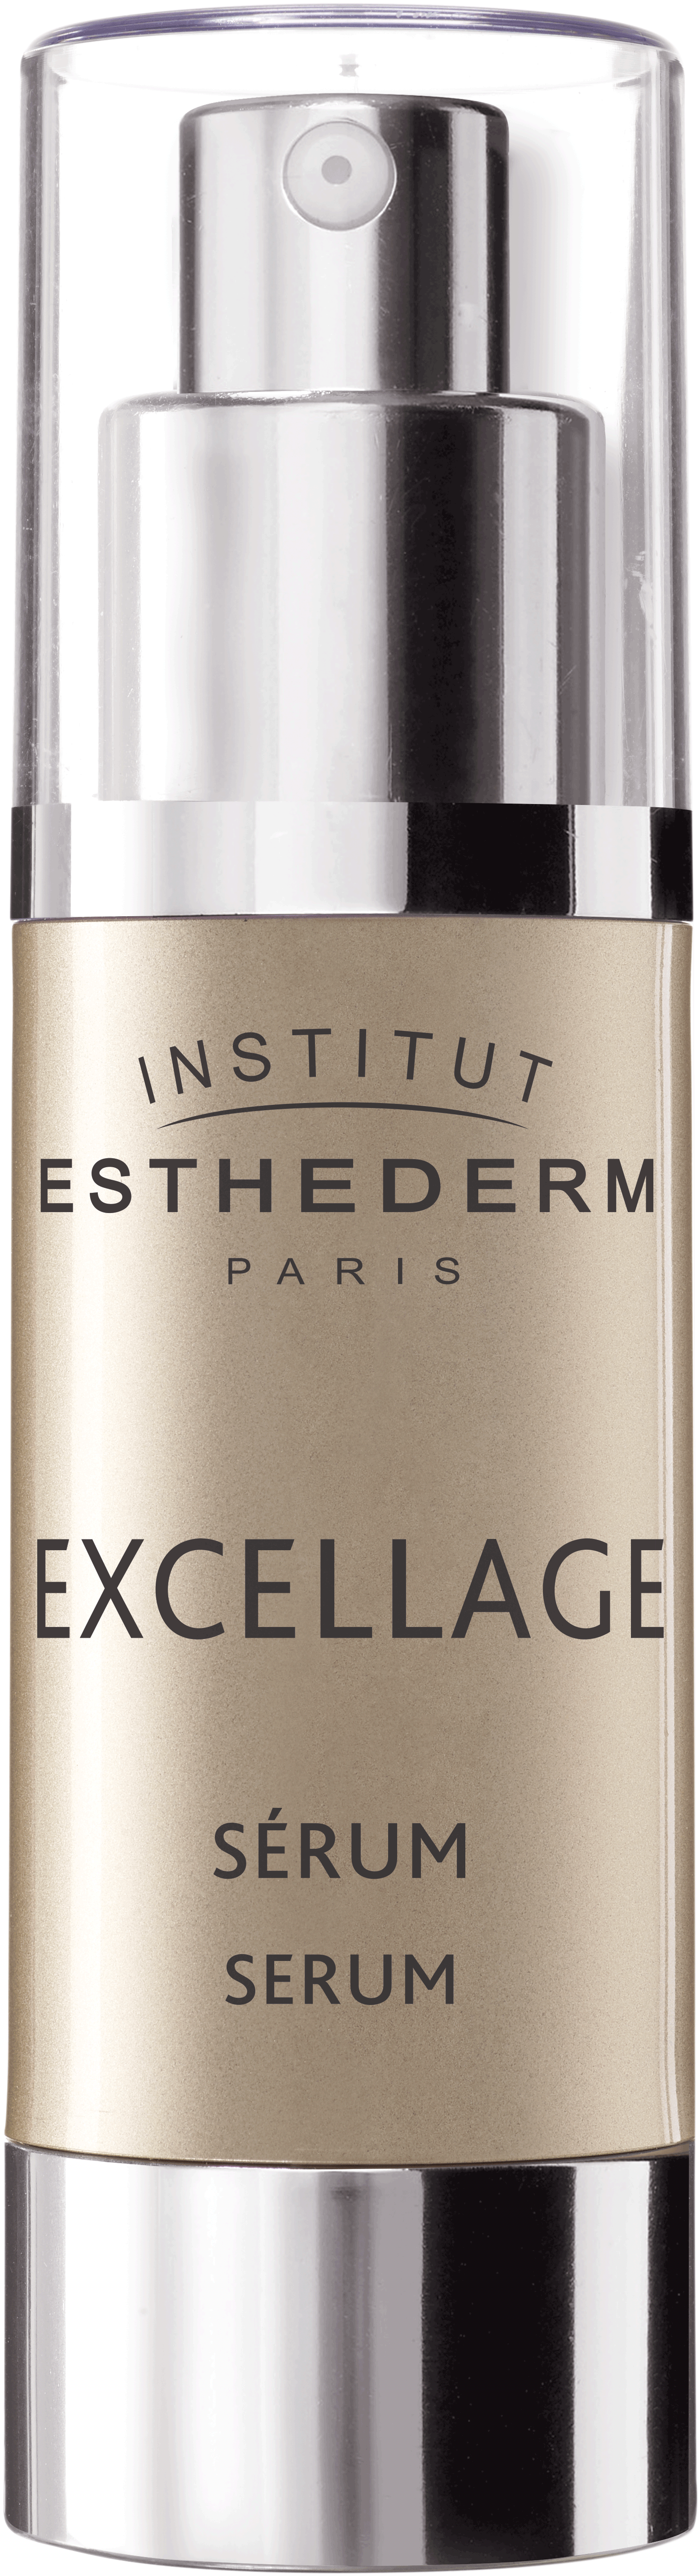 Institut Esthederm Excellage Serum Ορός Για Άμεση Πυκνότητα του Δέρματος 30ml